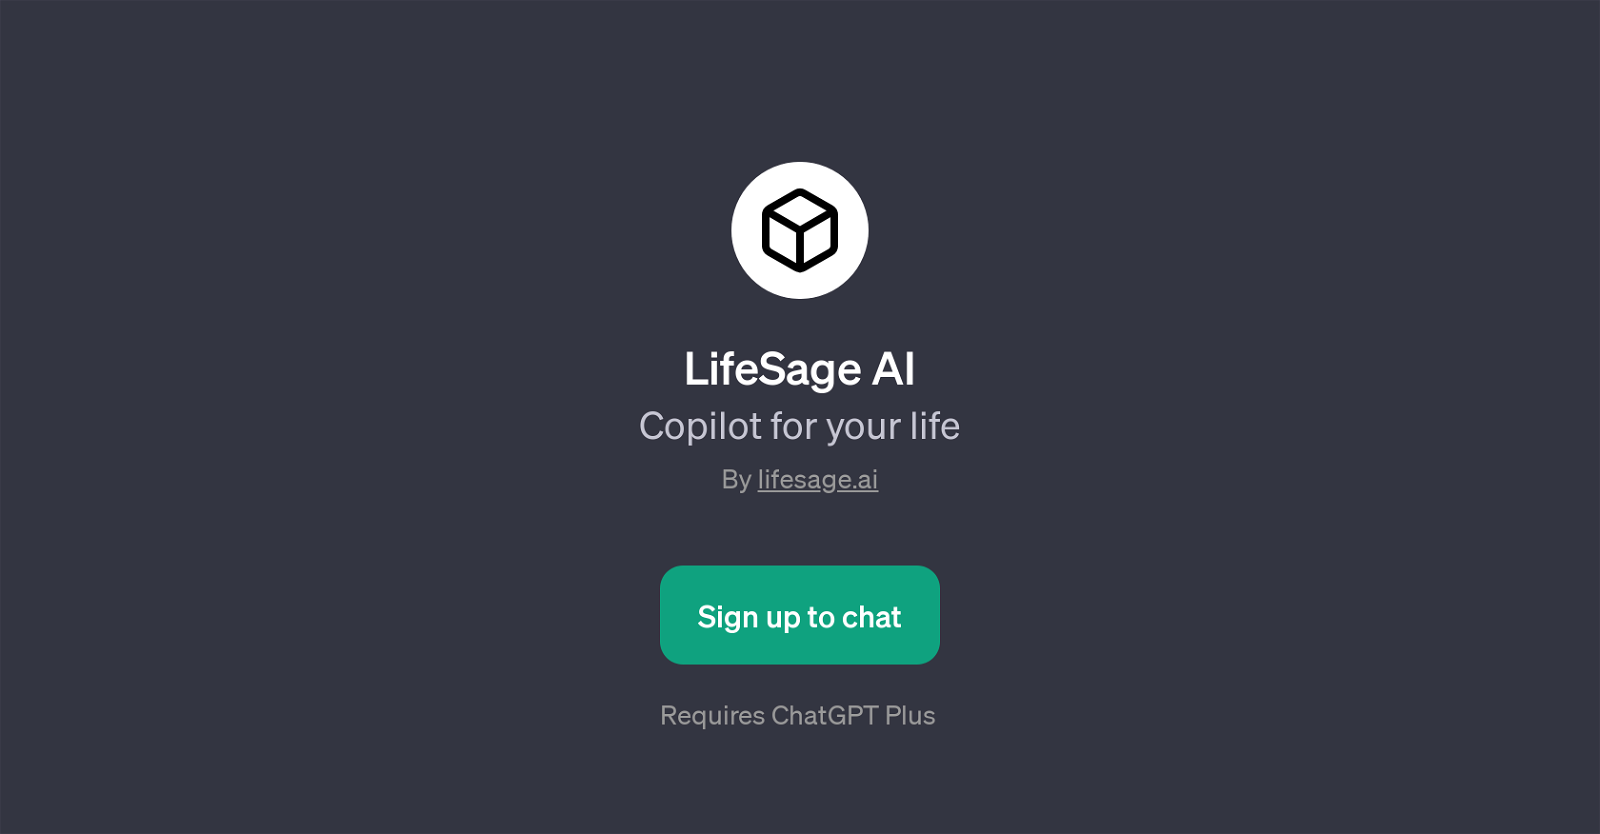 LifeSage AI website